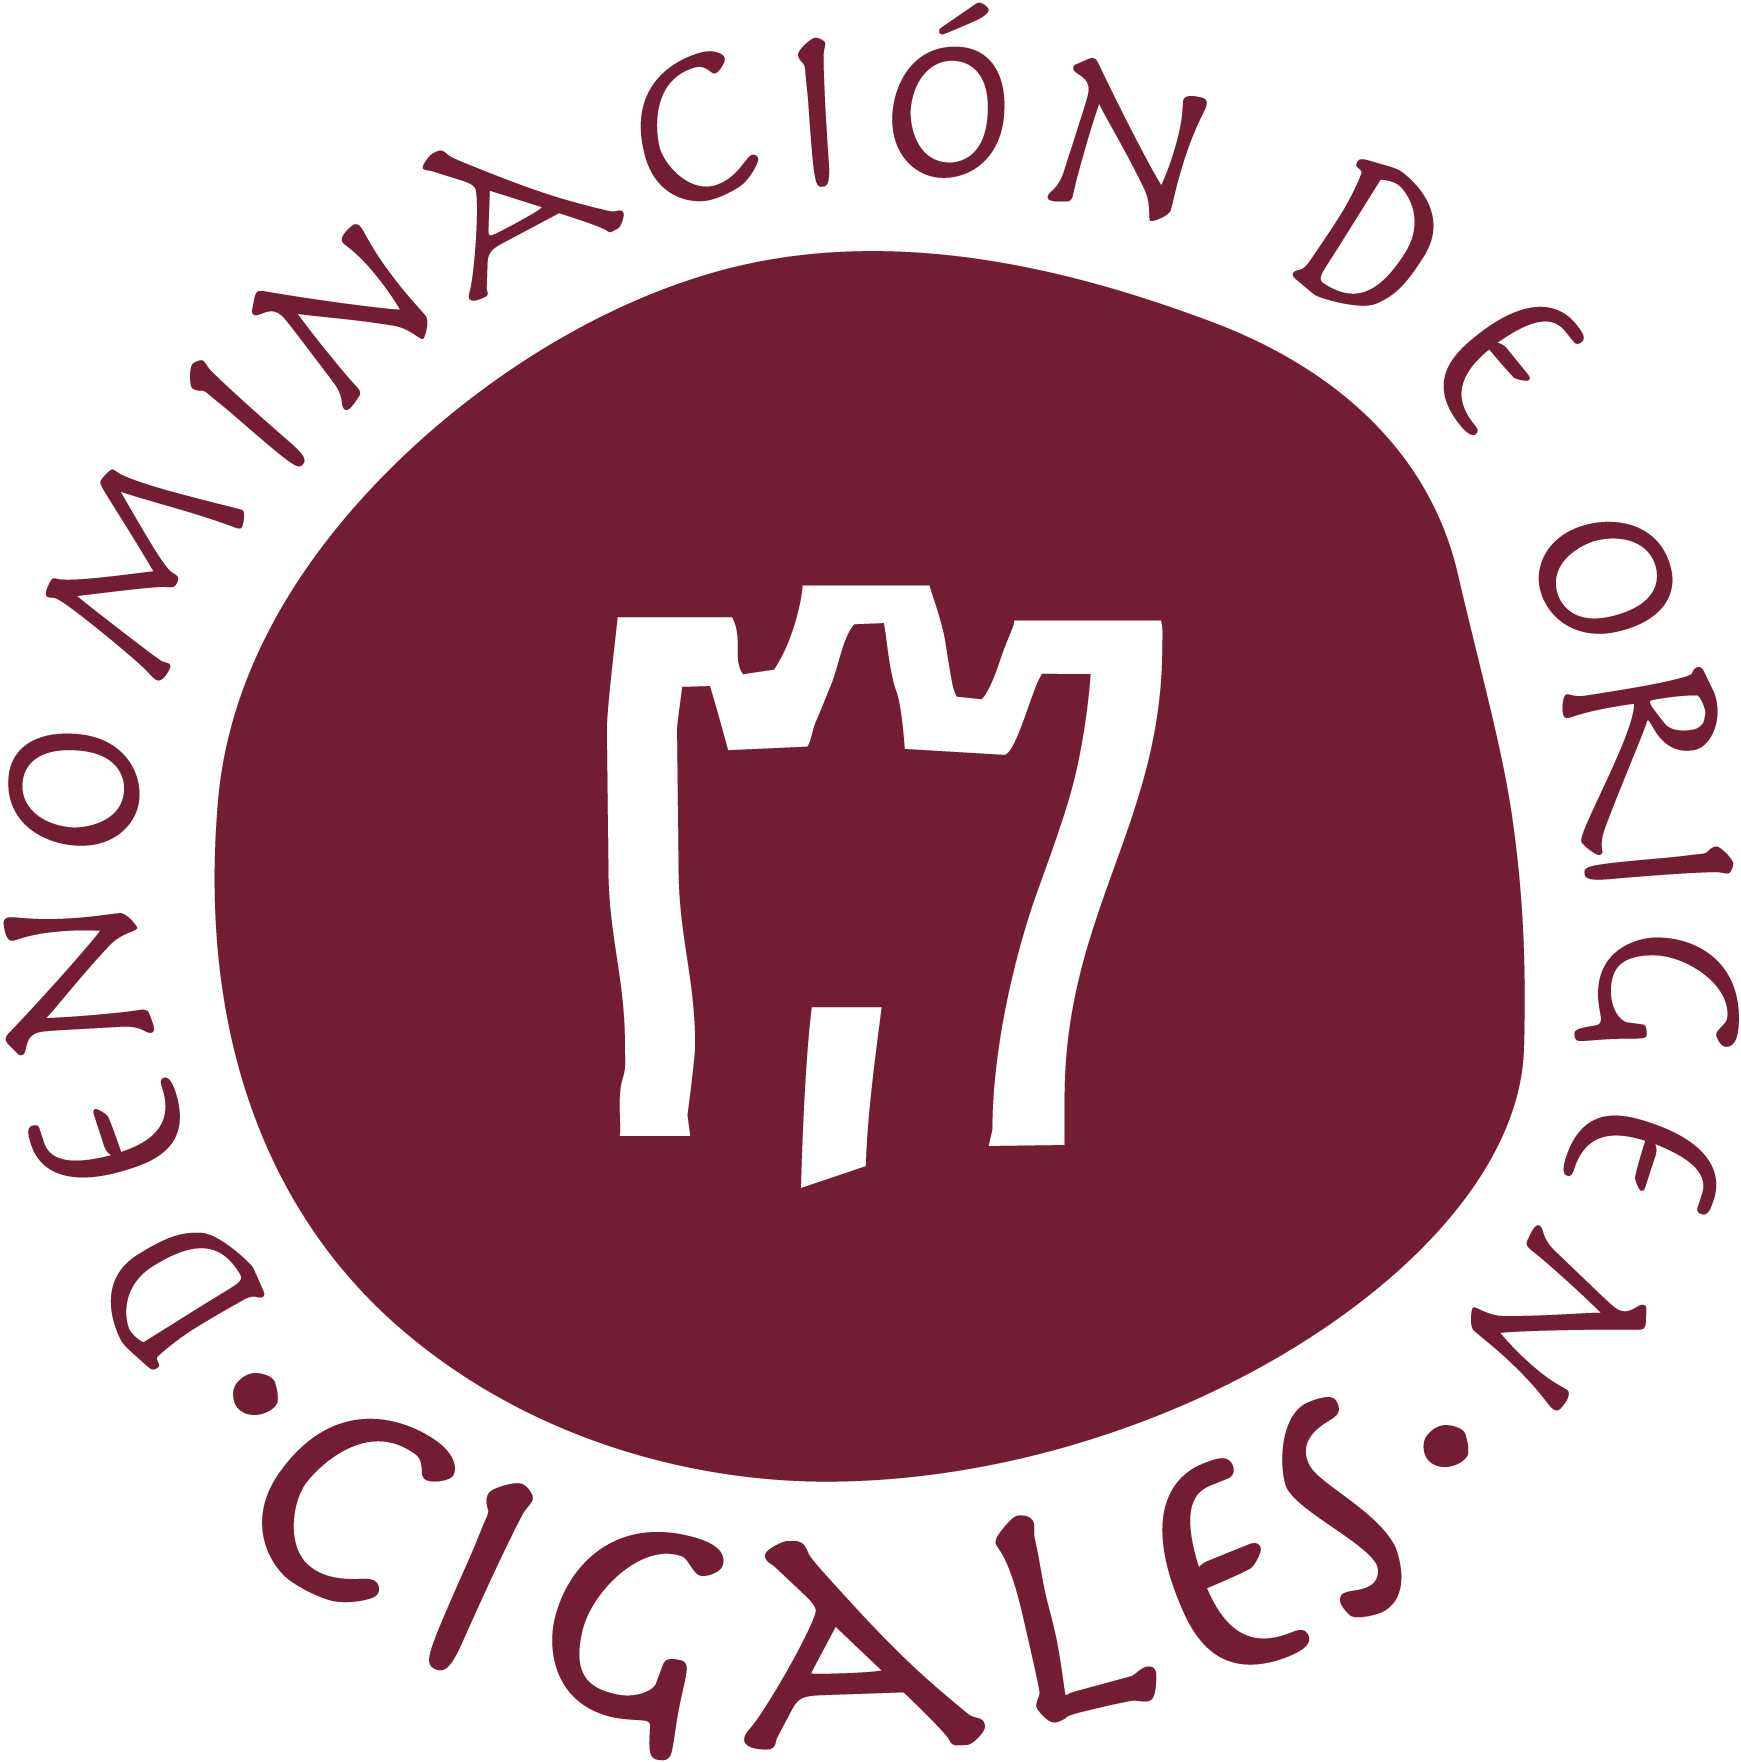 Spanish Wine - Cigales